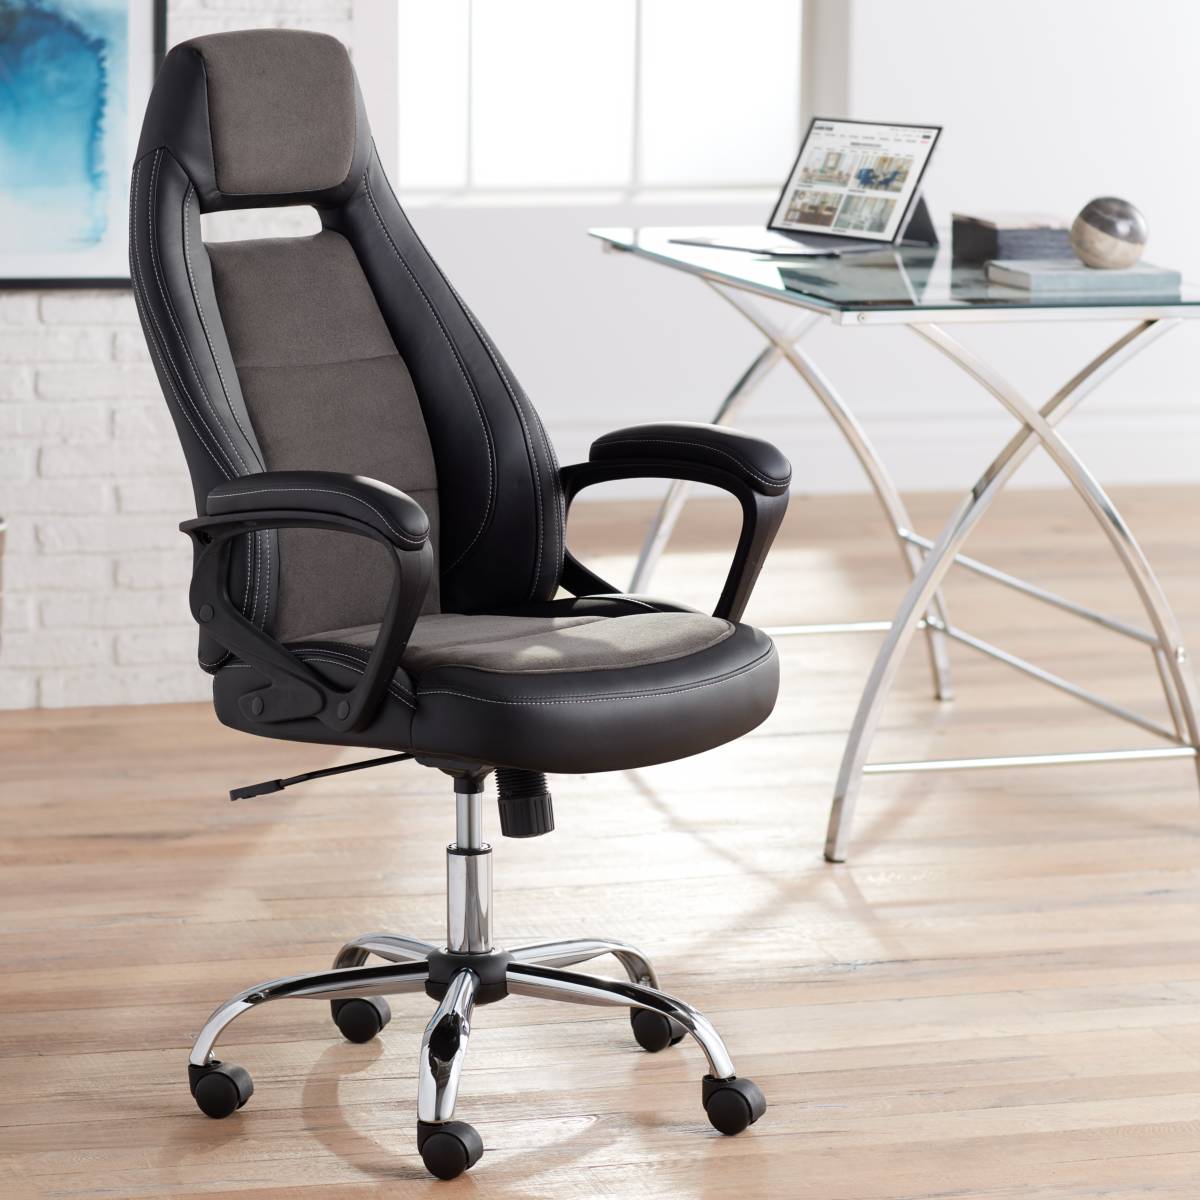 Dalton High Back Adjustable Swivel Office Chair  63m83cropped ?qlt=70&wid=1200&hei=1200&fmt=jpeg